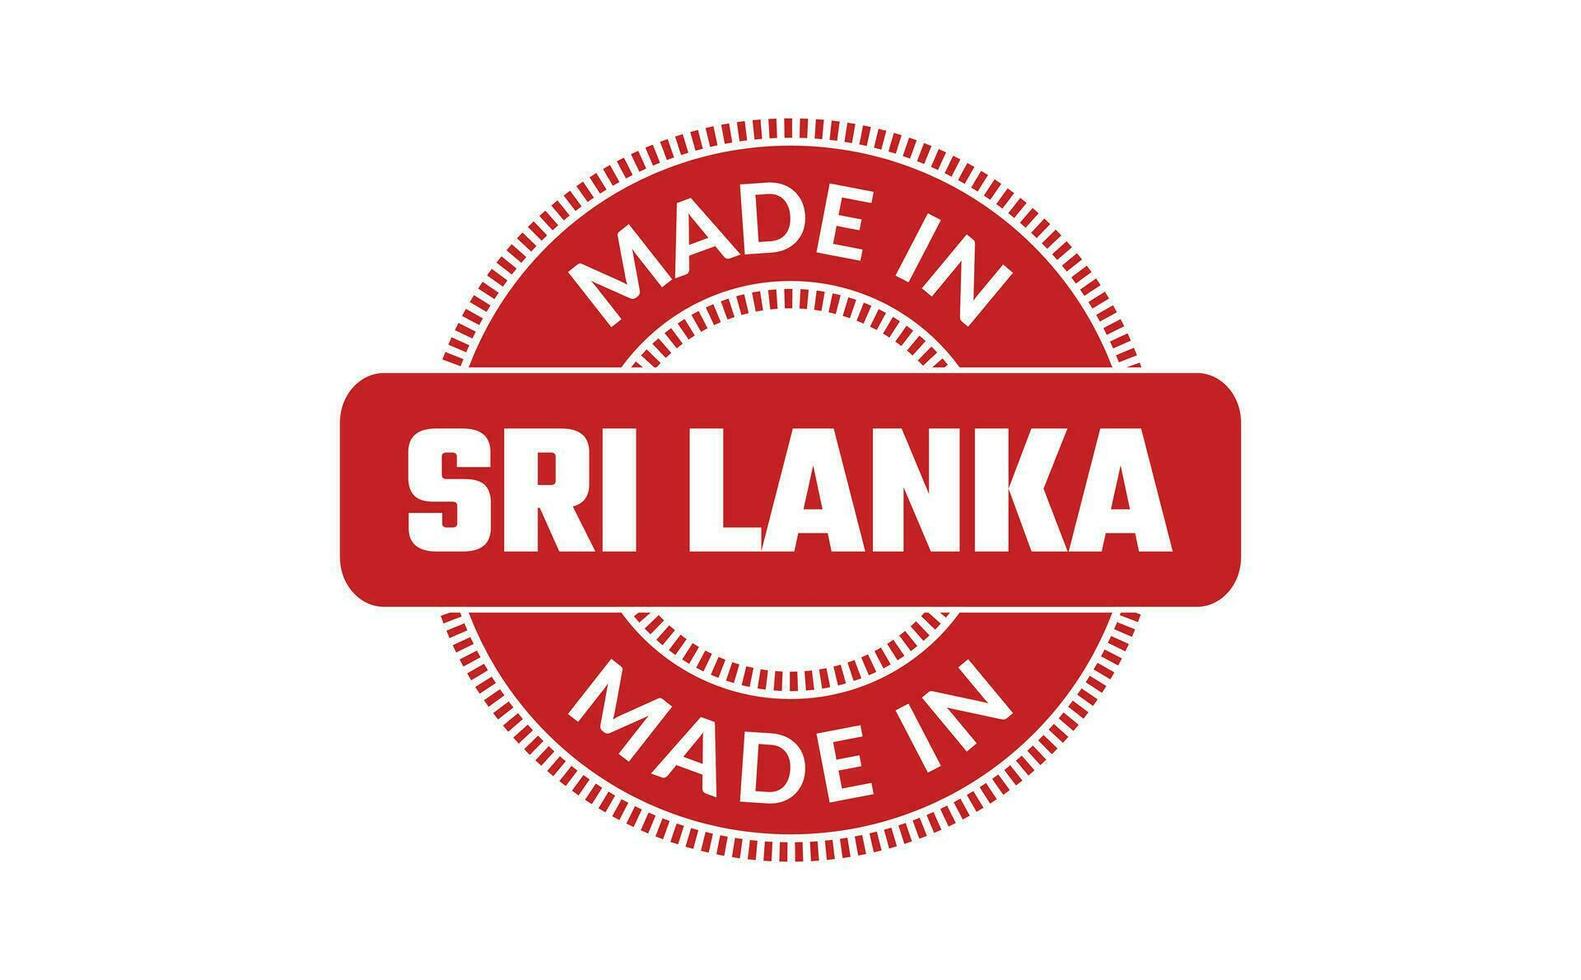 Made In Sri Lanka Rubber Stamp vector